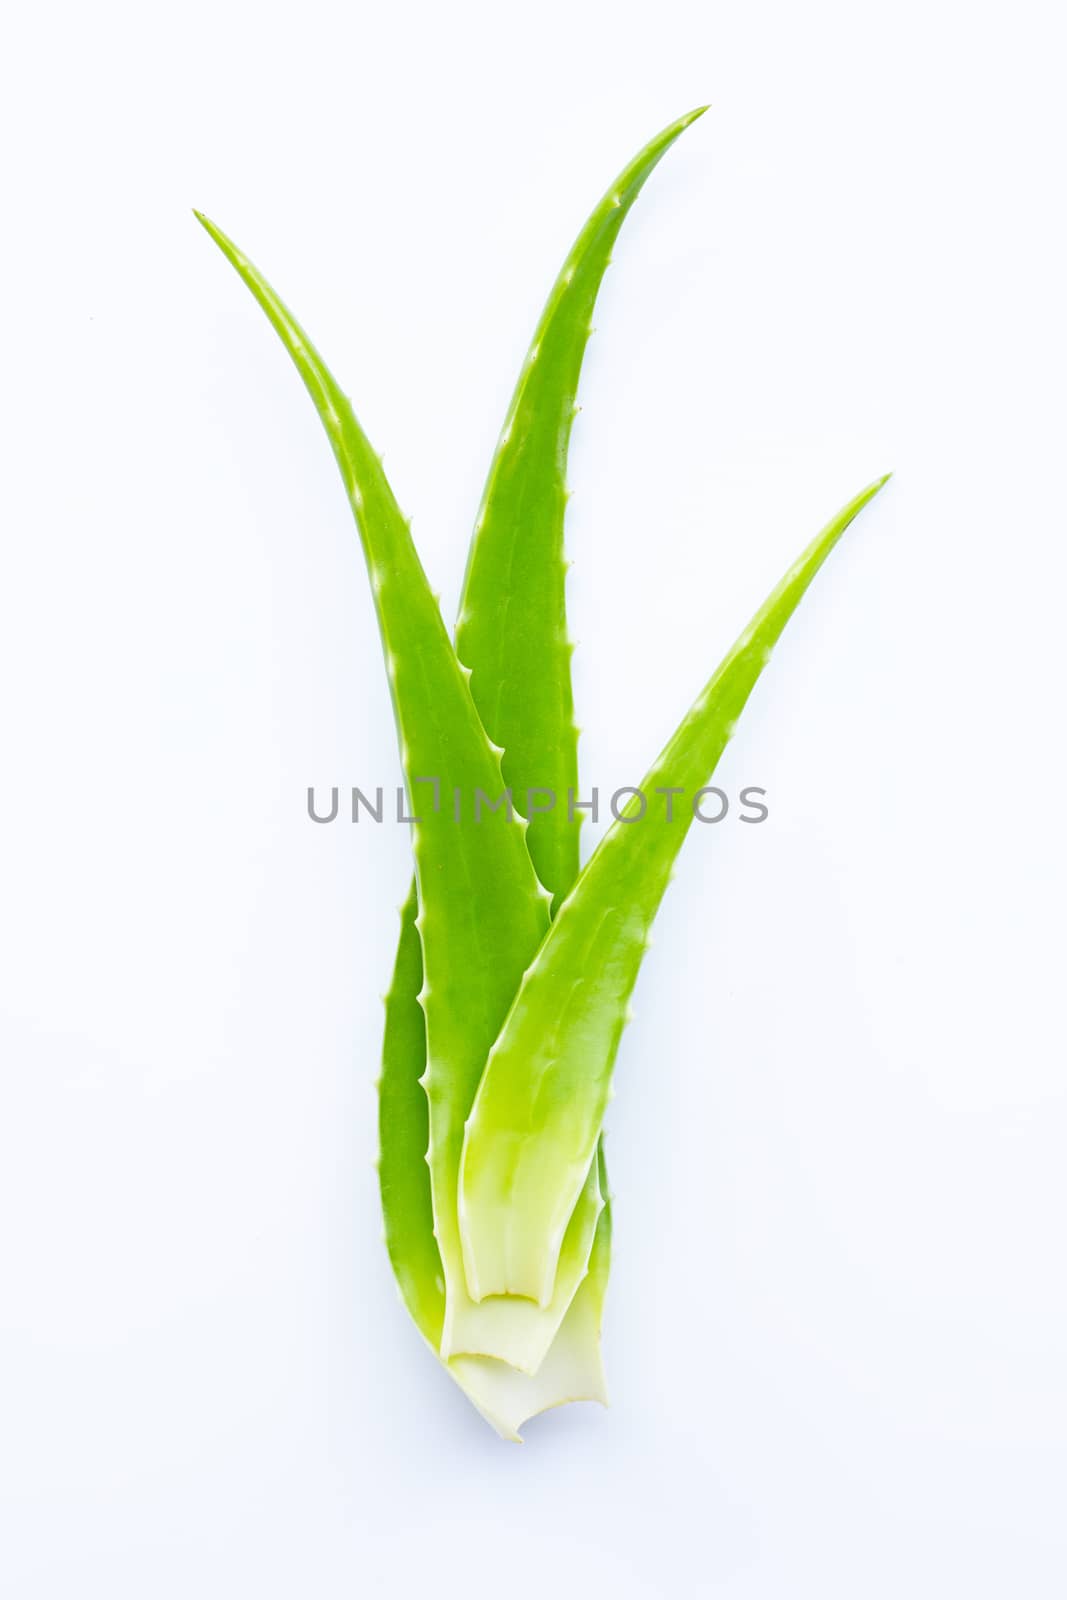 Aloe vera fresh leaves on white  by Bowonpat